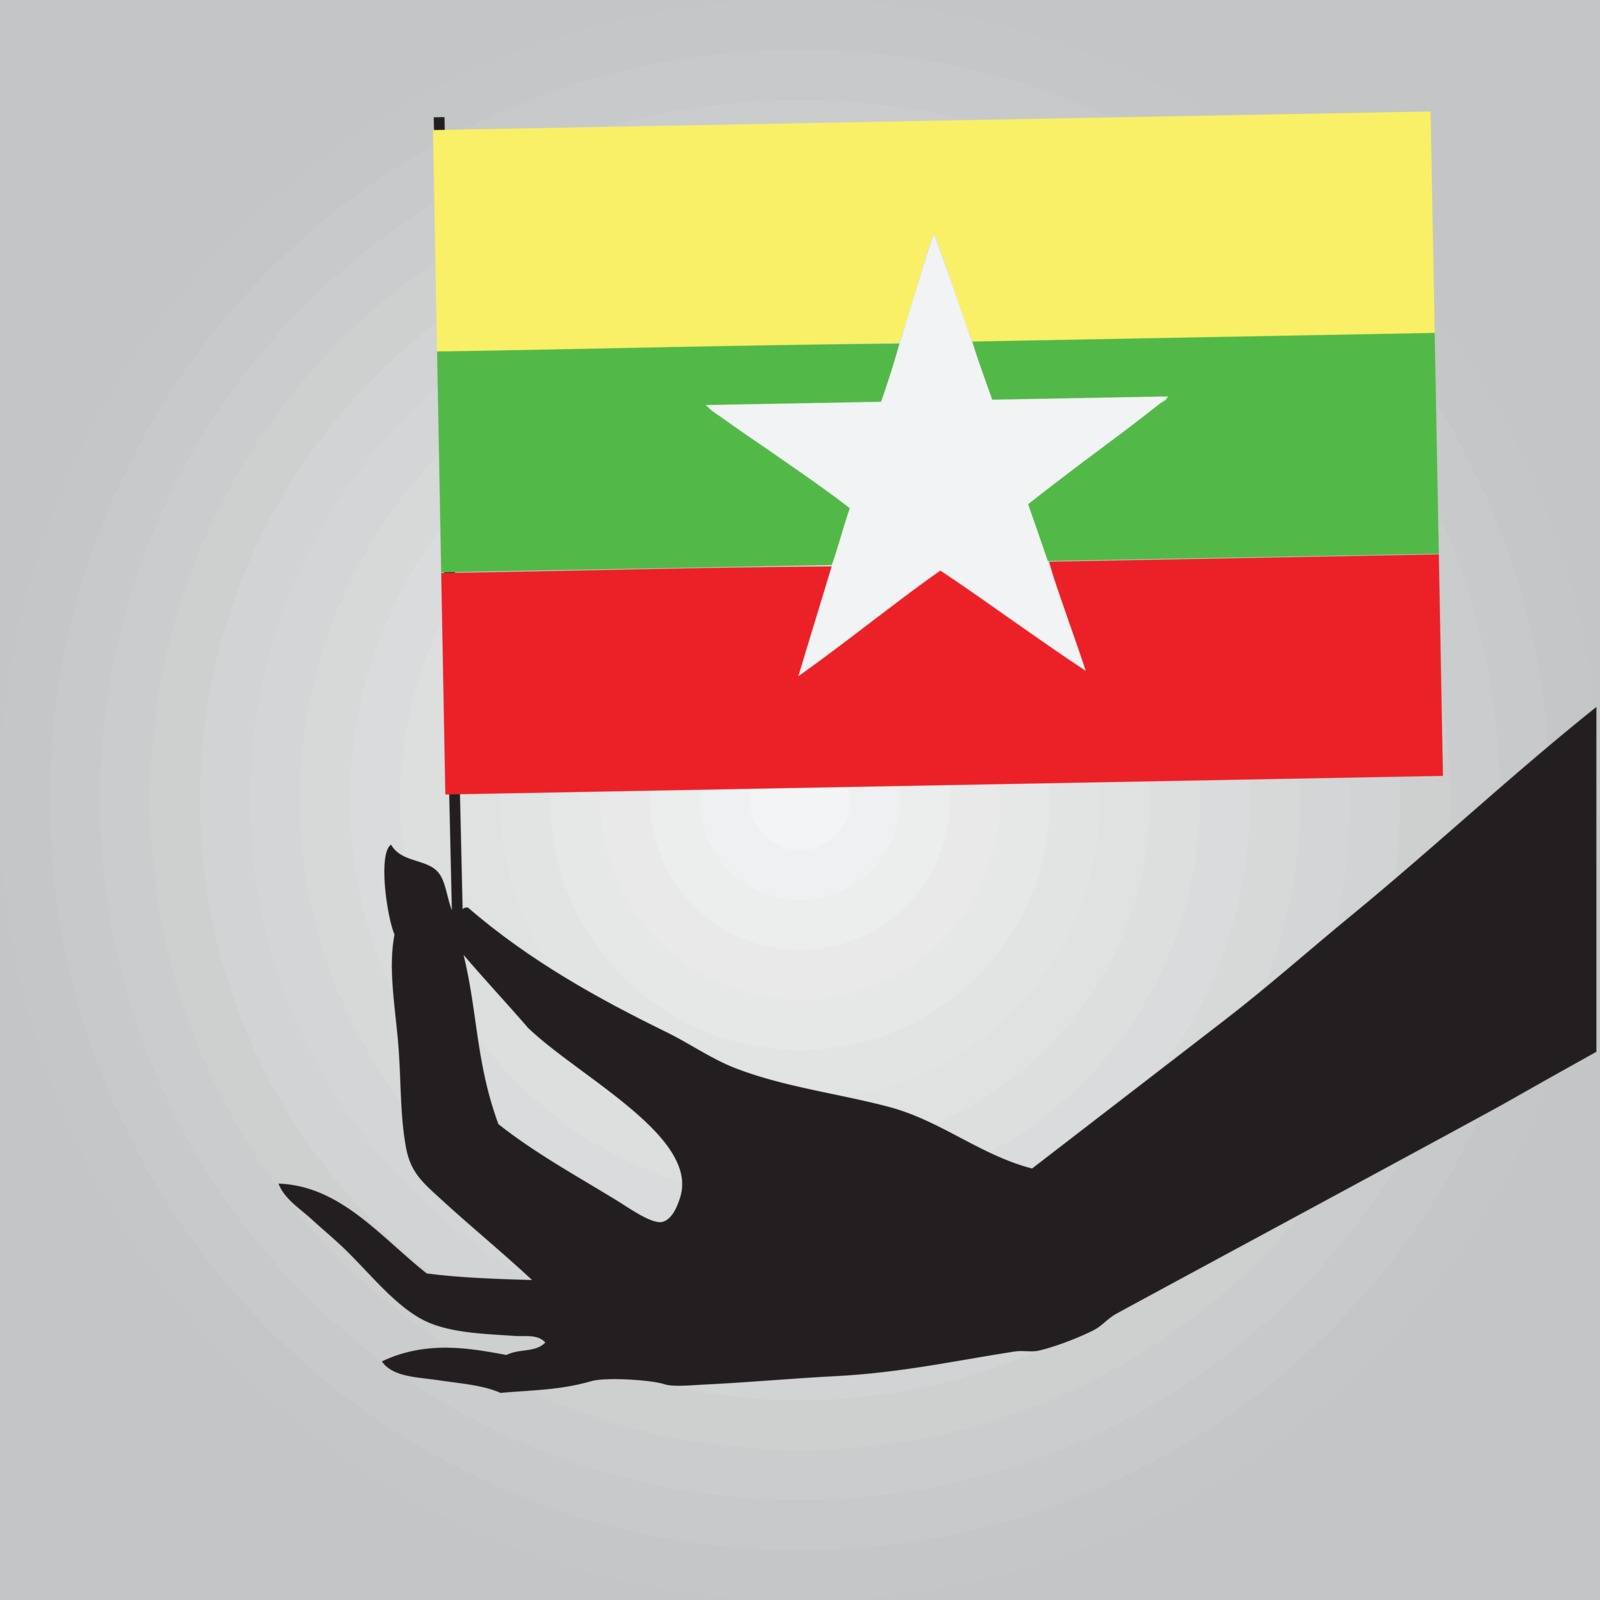 Burma flag in his hand. Vector illustration.